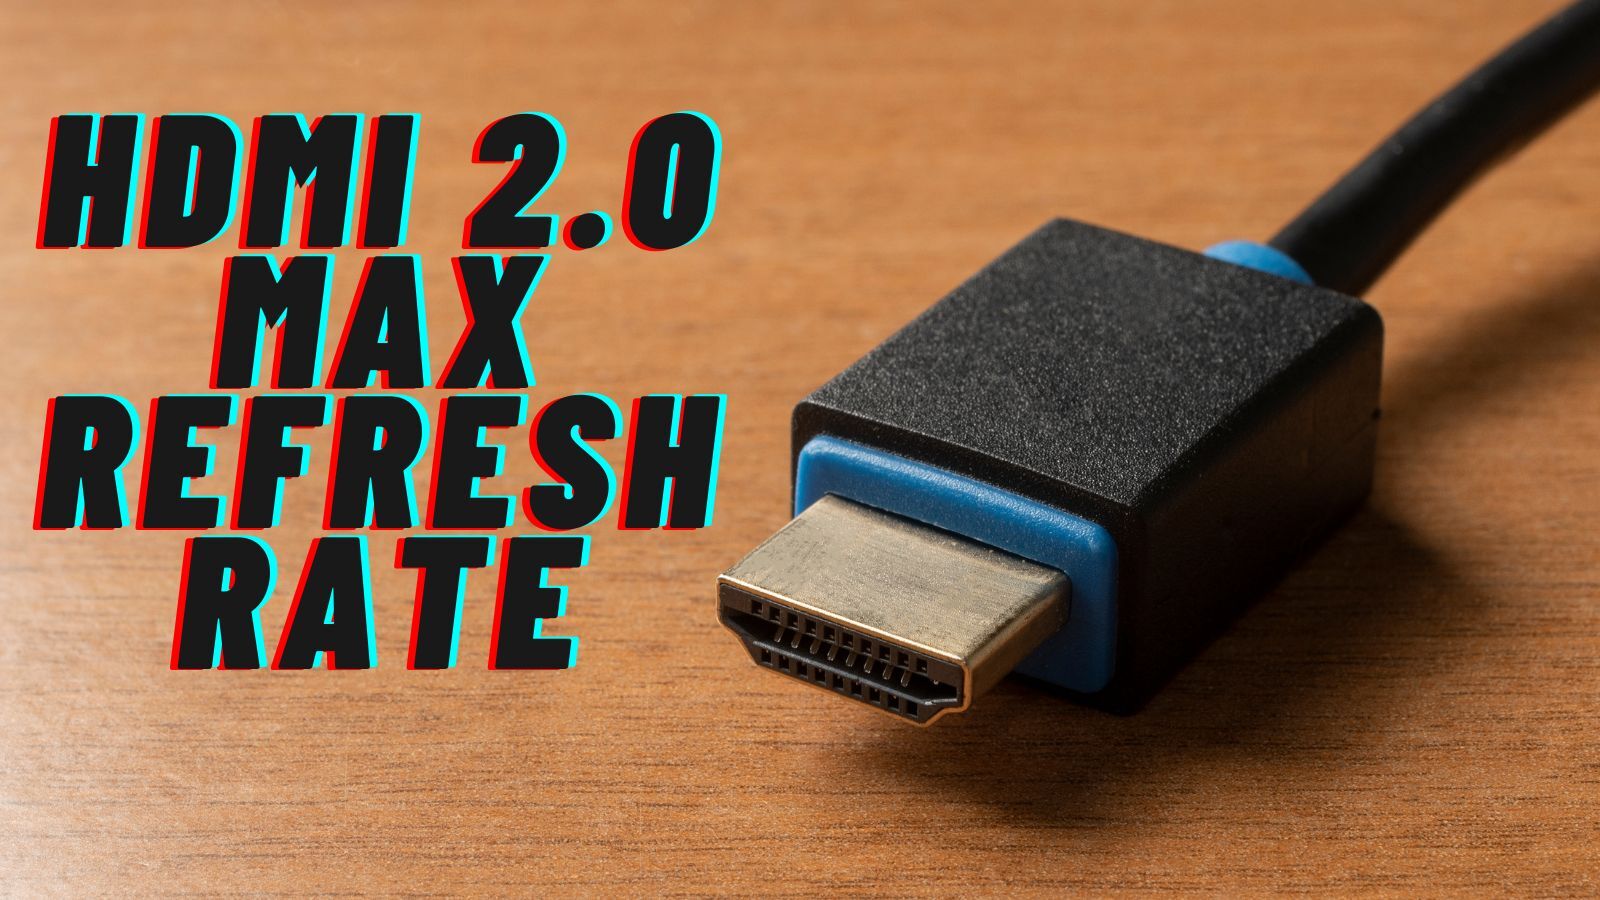 HDMI 2.0 Max Refresh Rate & Resolution [Max 240Hz]